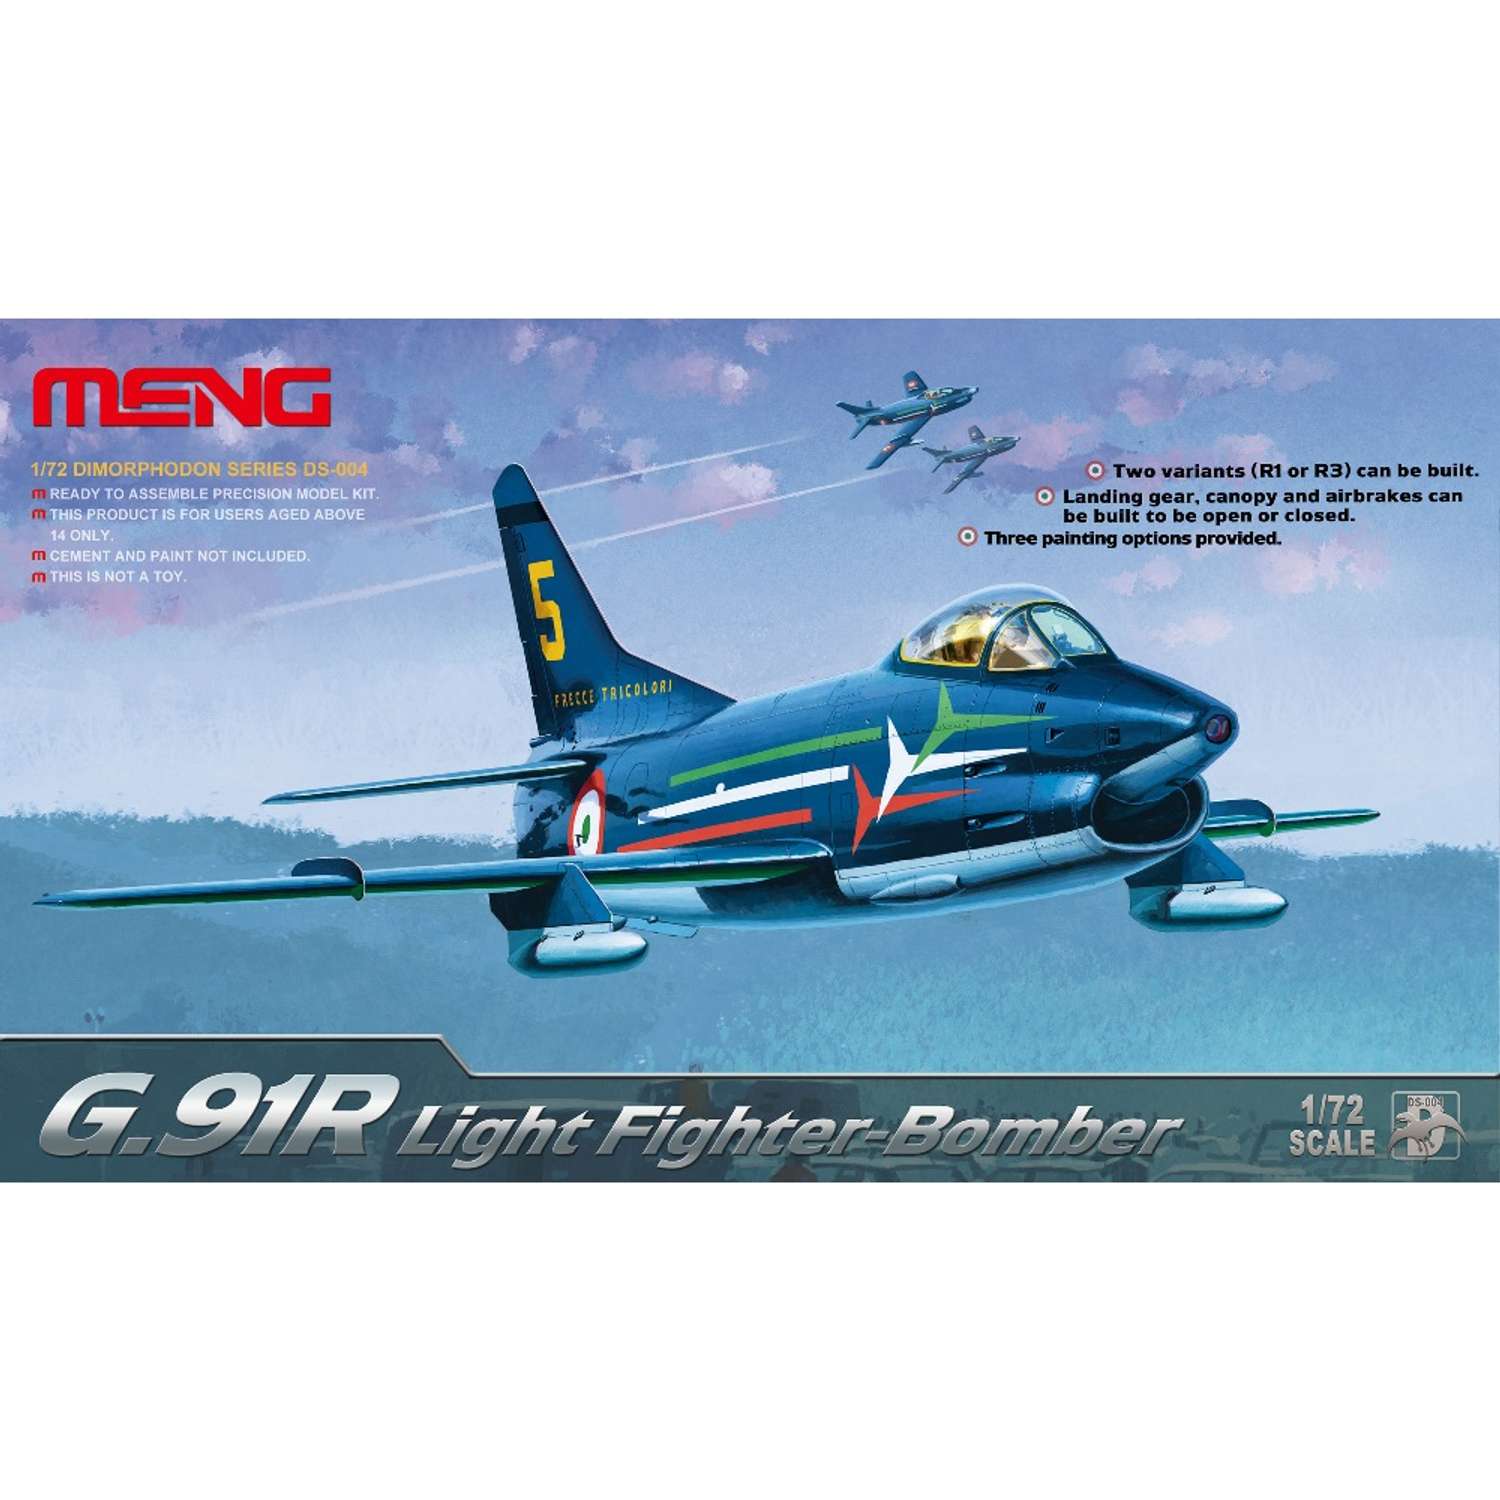 Сборная модель MENG DS-004 самолёт G.91R Light Fighter-Bomber 1/72 18467133582 - фото 1